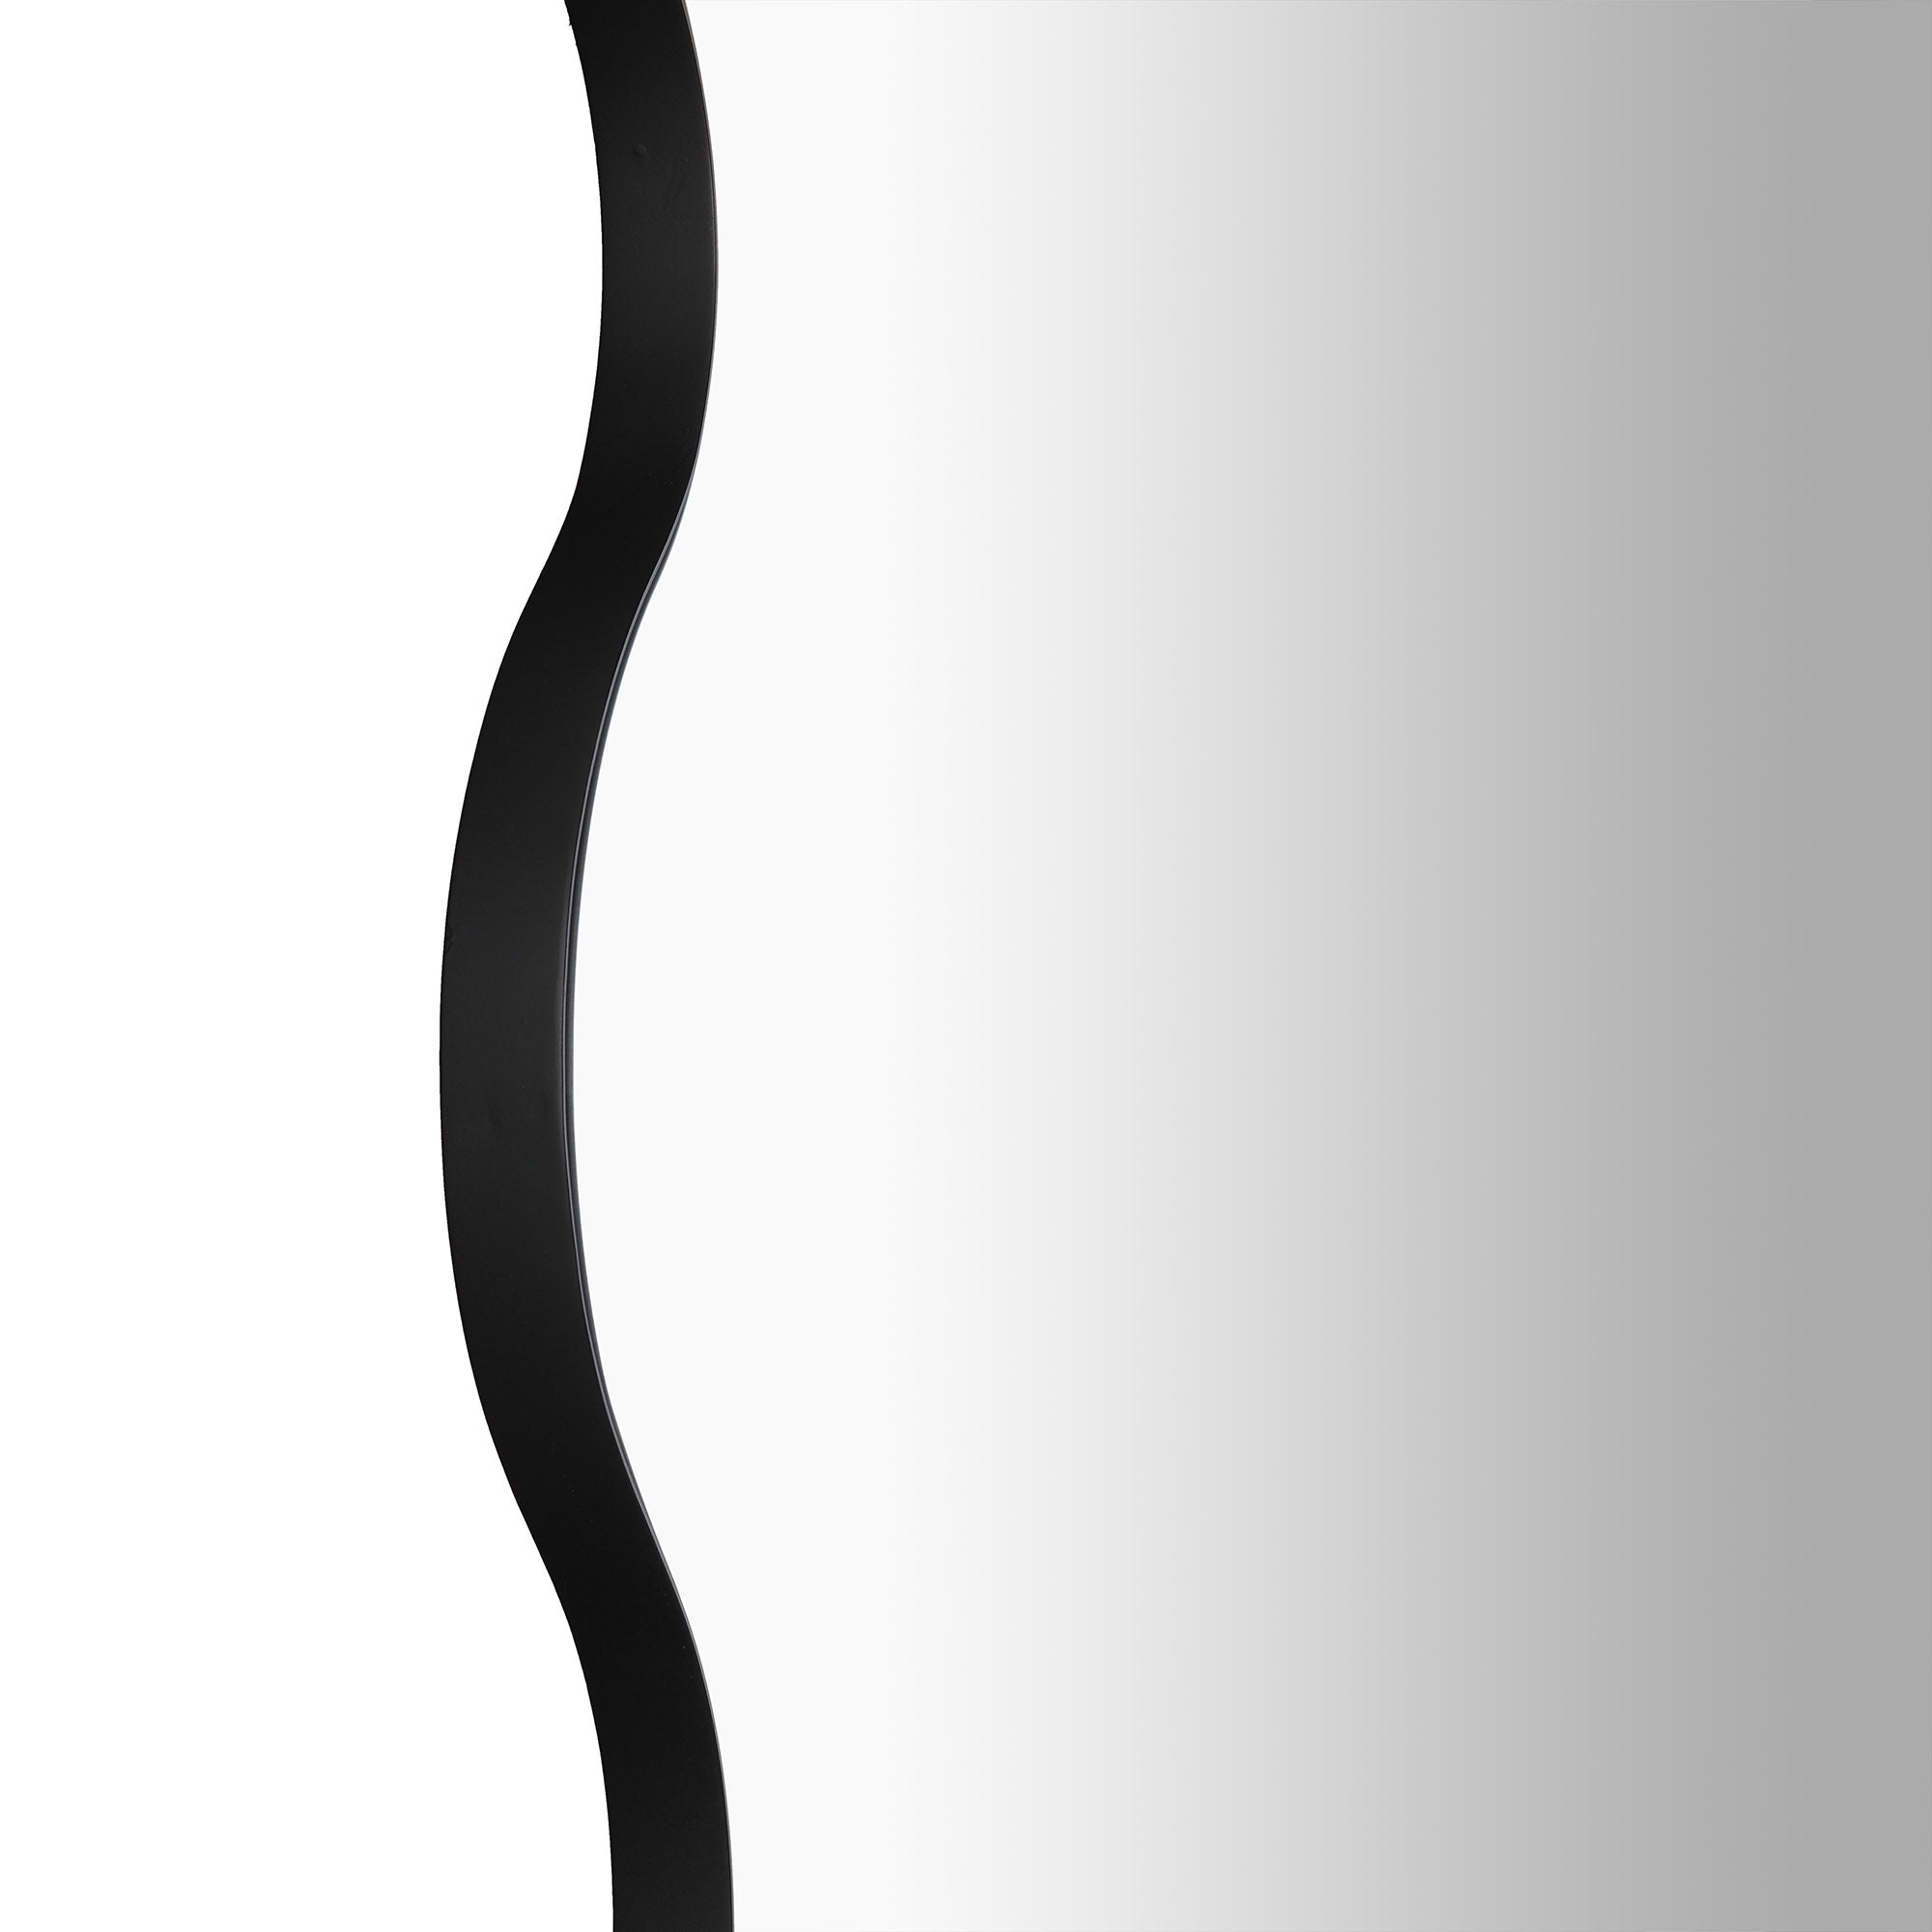 Luisa Wavy Curved Full length Mirror 180 x 110 cm, Black